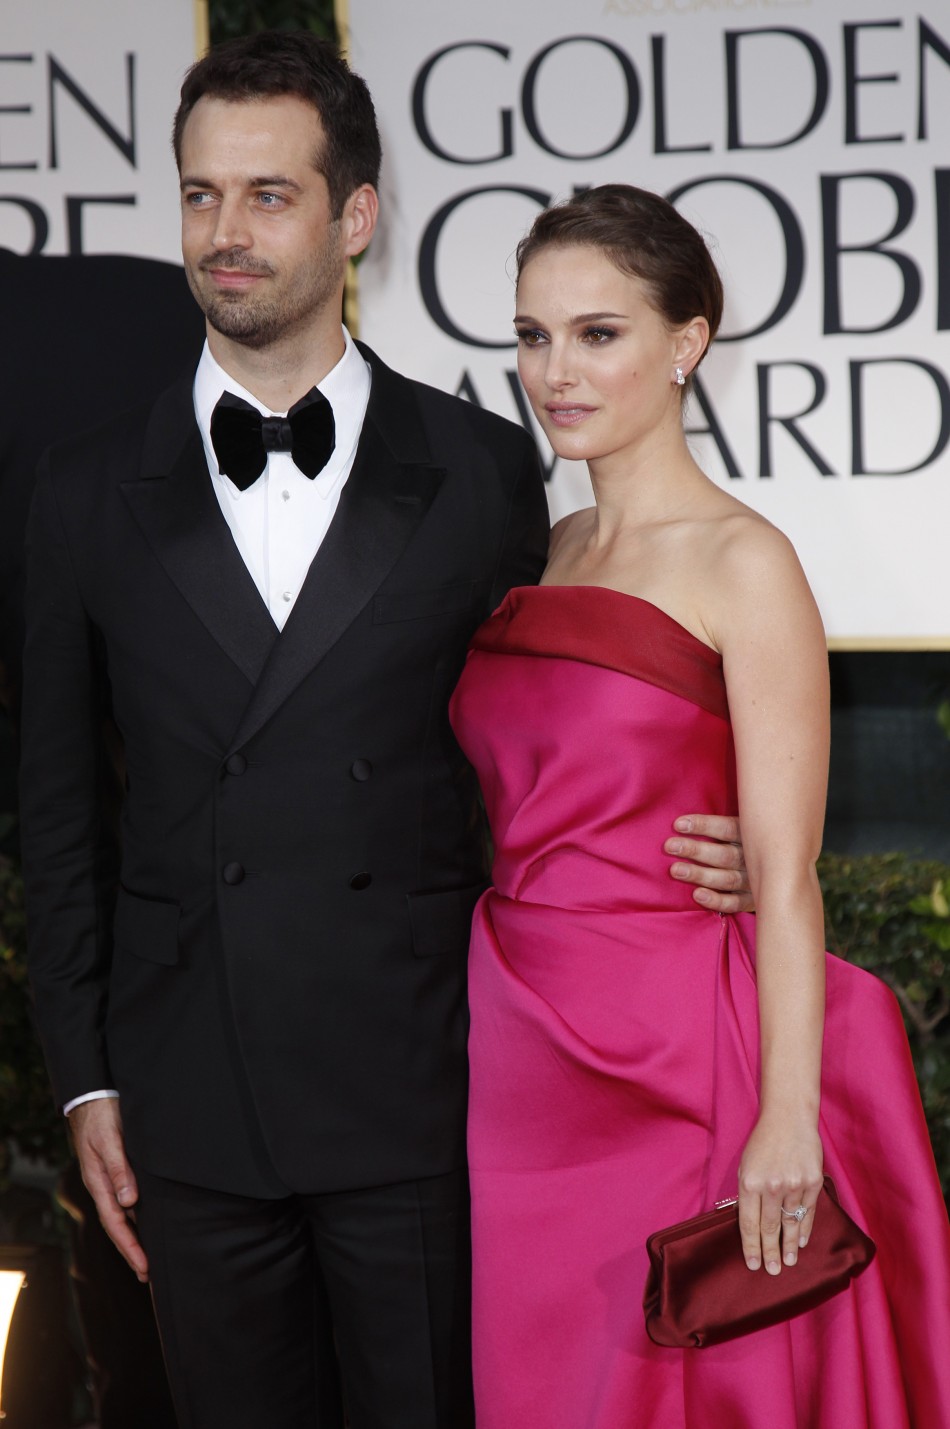 Best Dressed Couple at Golden Globe Awards